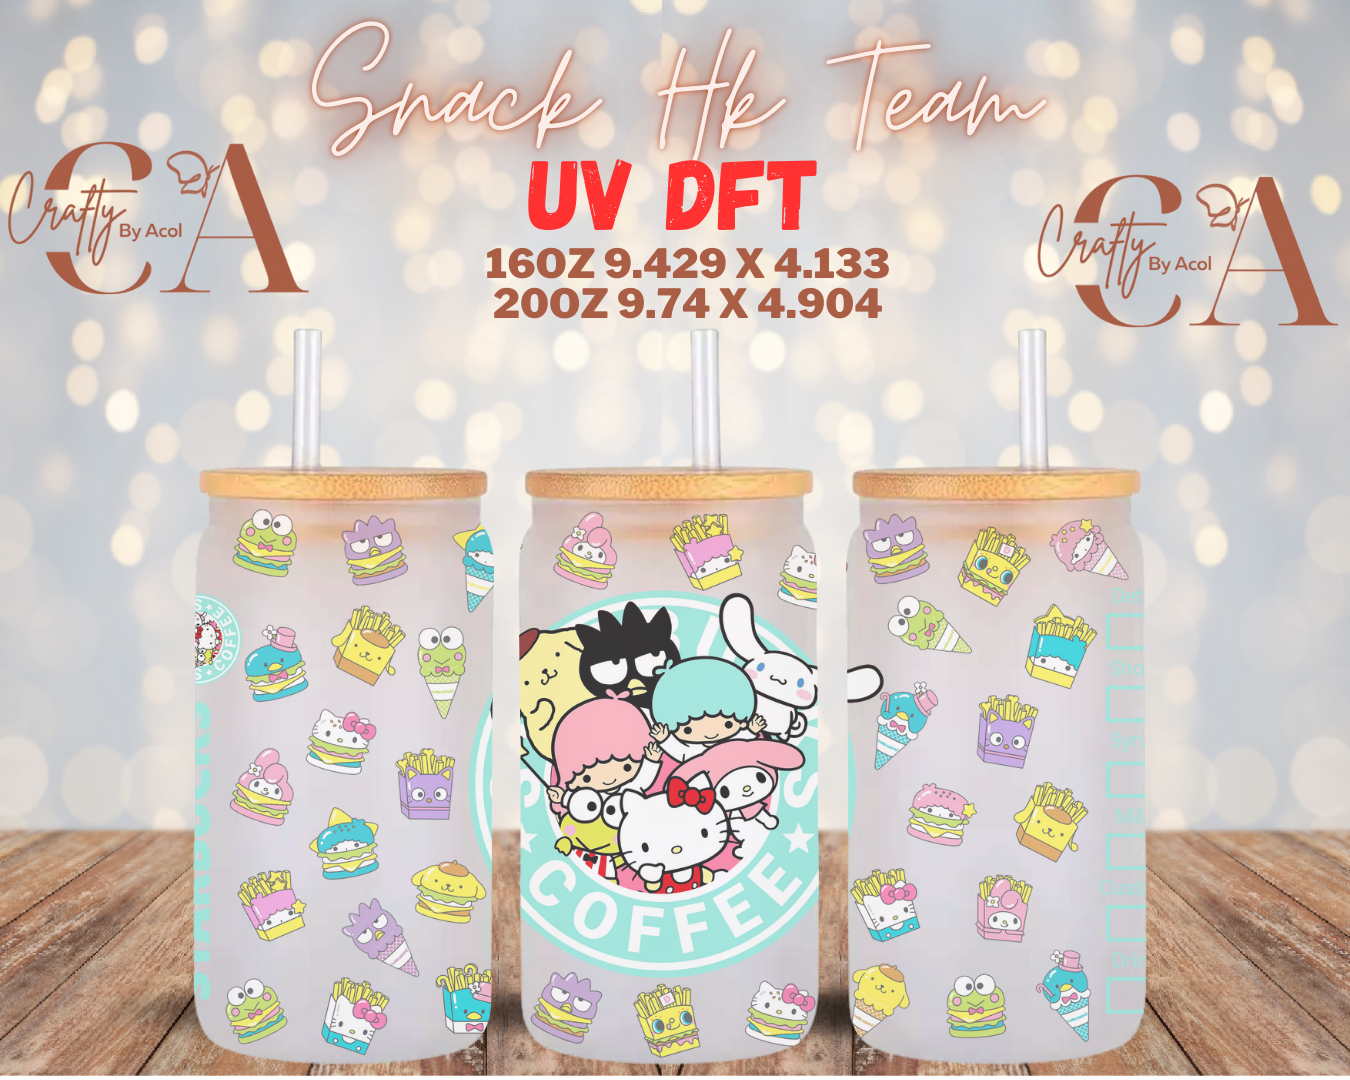 Snack HK Team UV DFT Cup Wrap